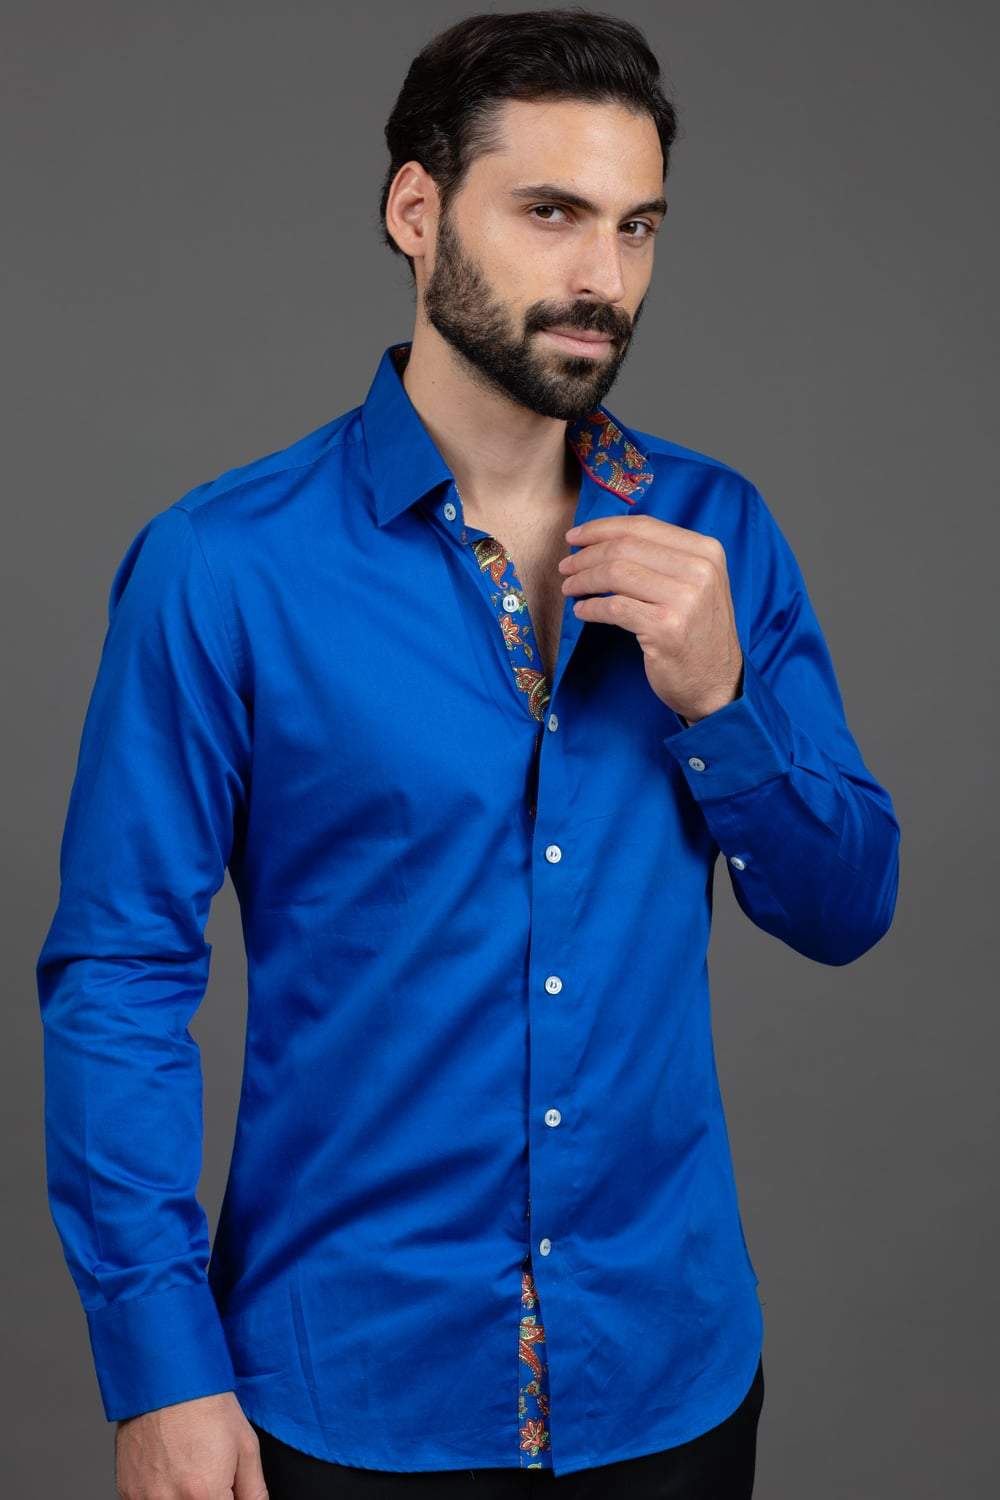 Electric Blue Shirt